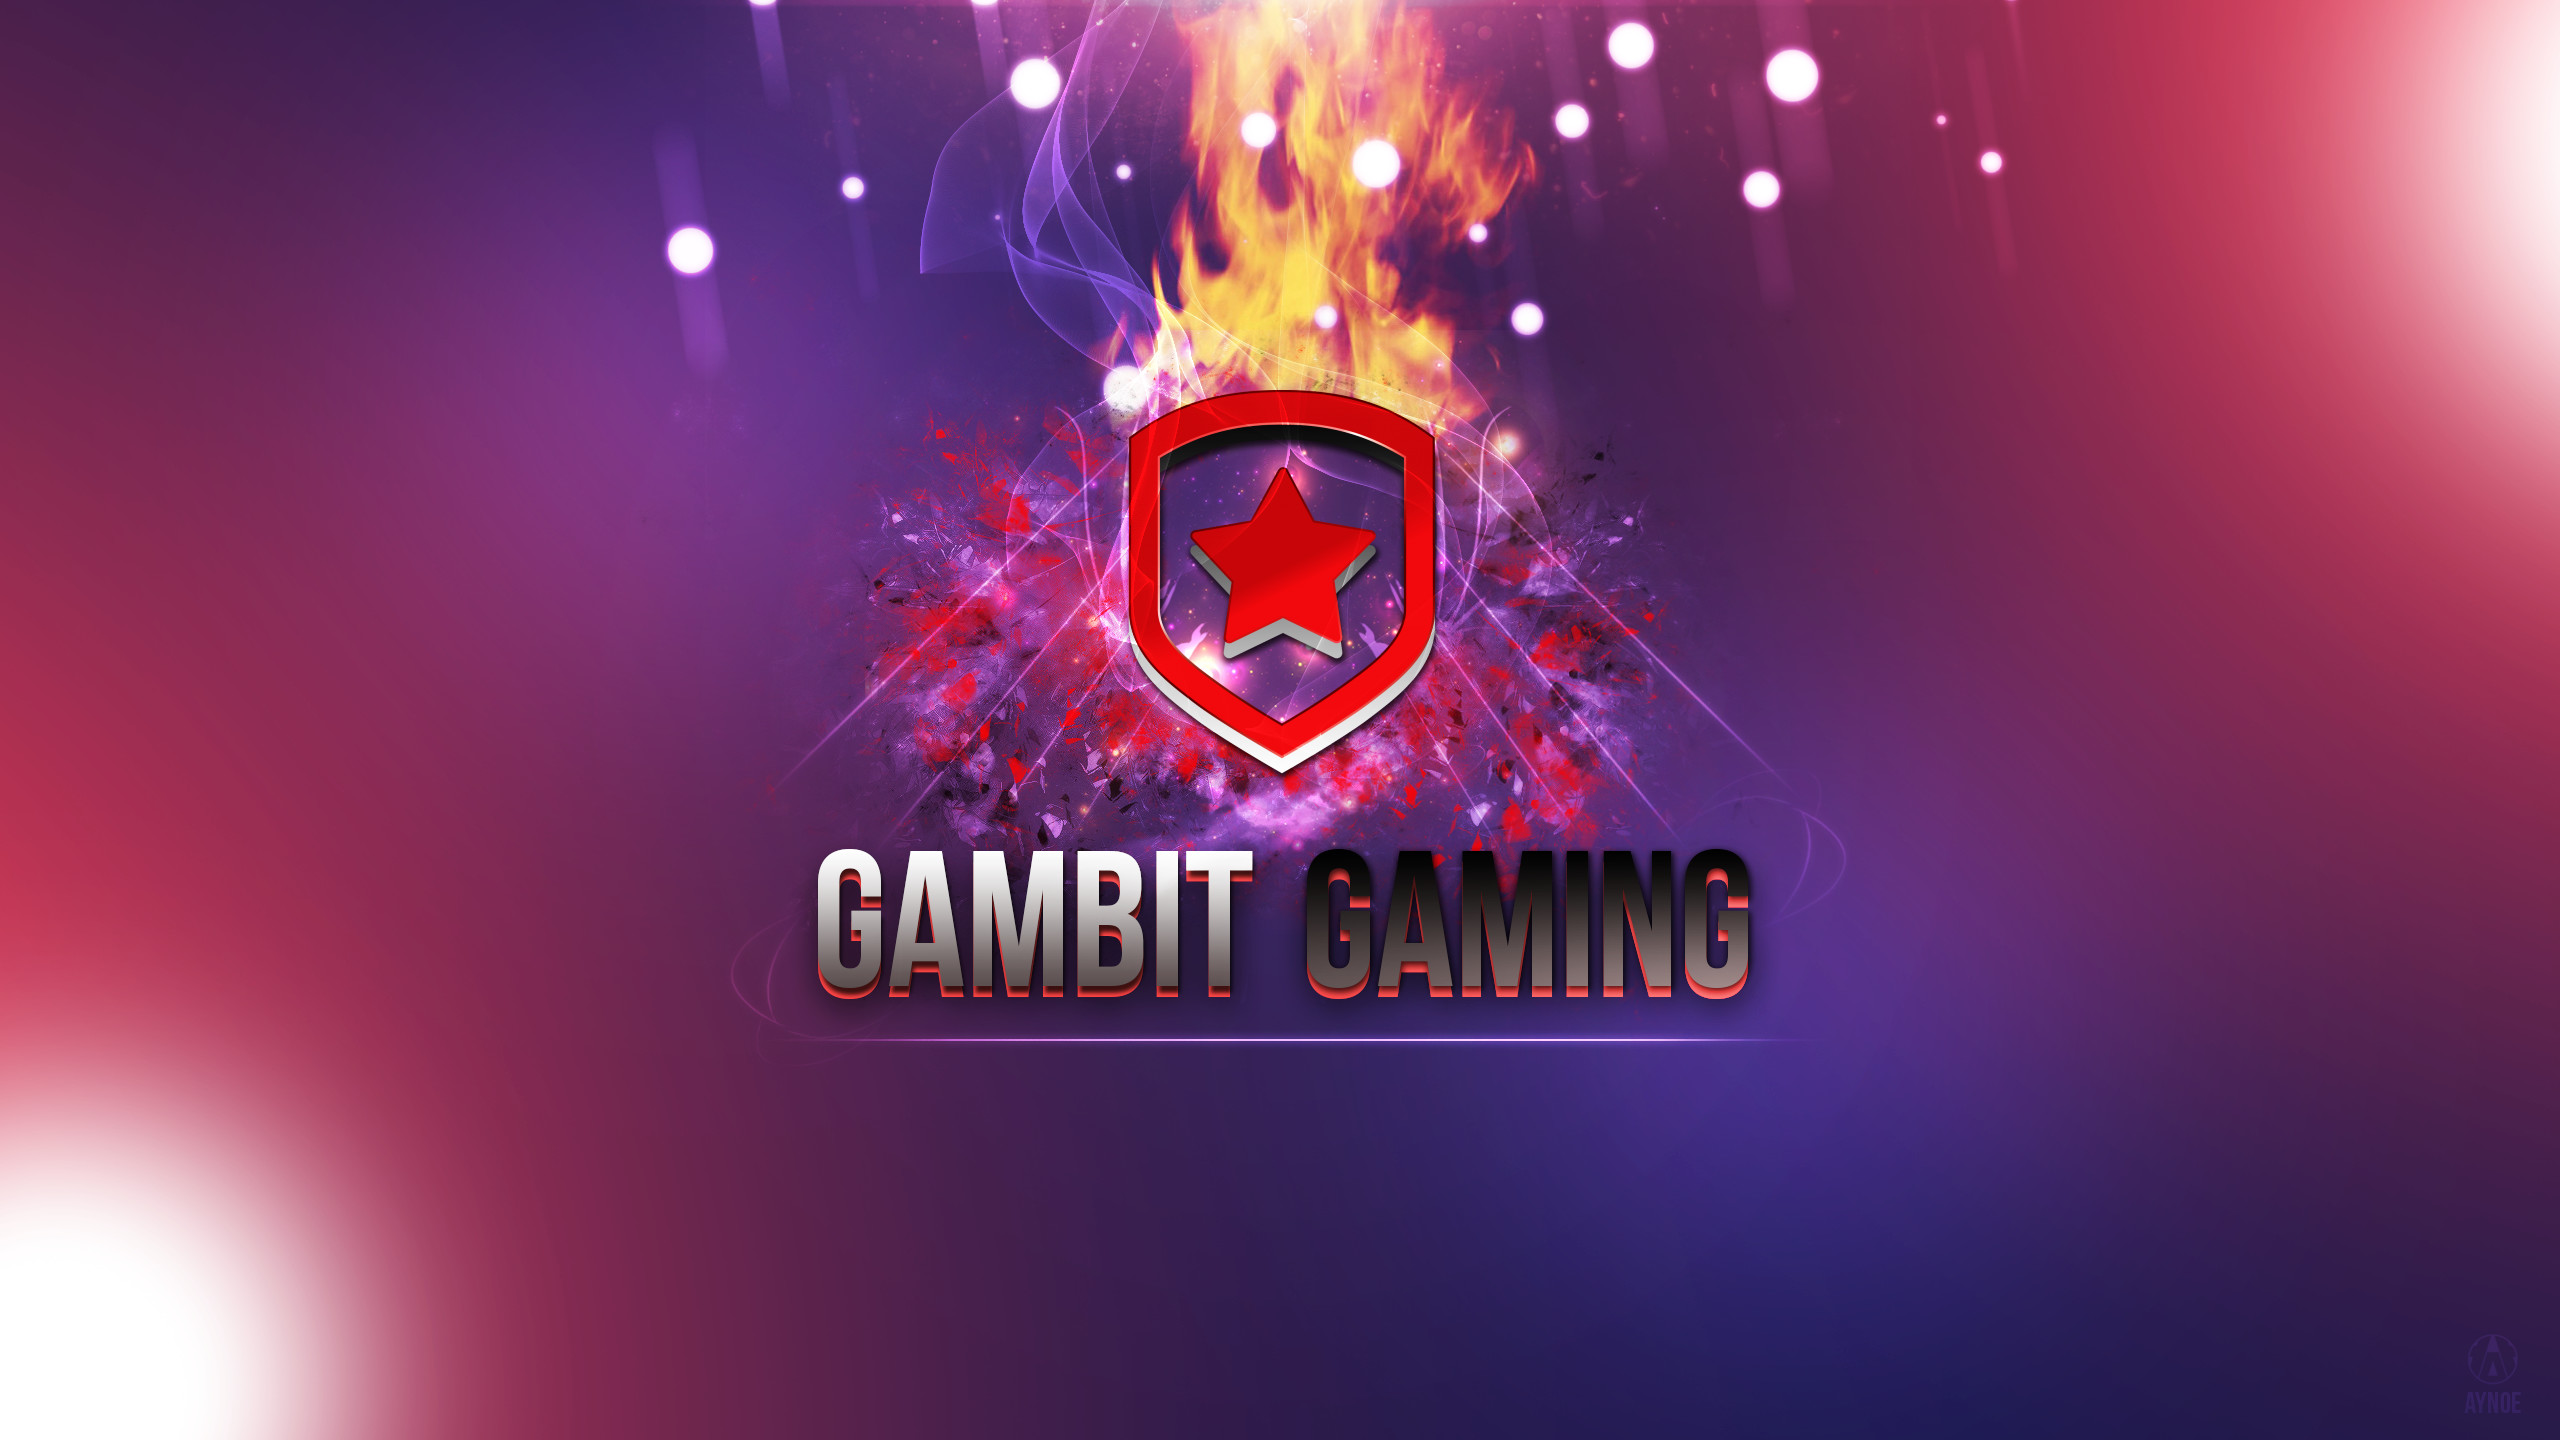 2560x1440 ... Gambit Gaming 2 Wallpaper Logo - League of Legends by Aynoe